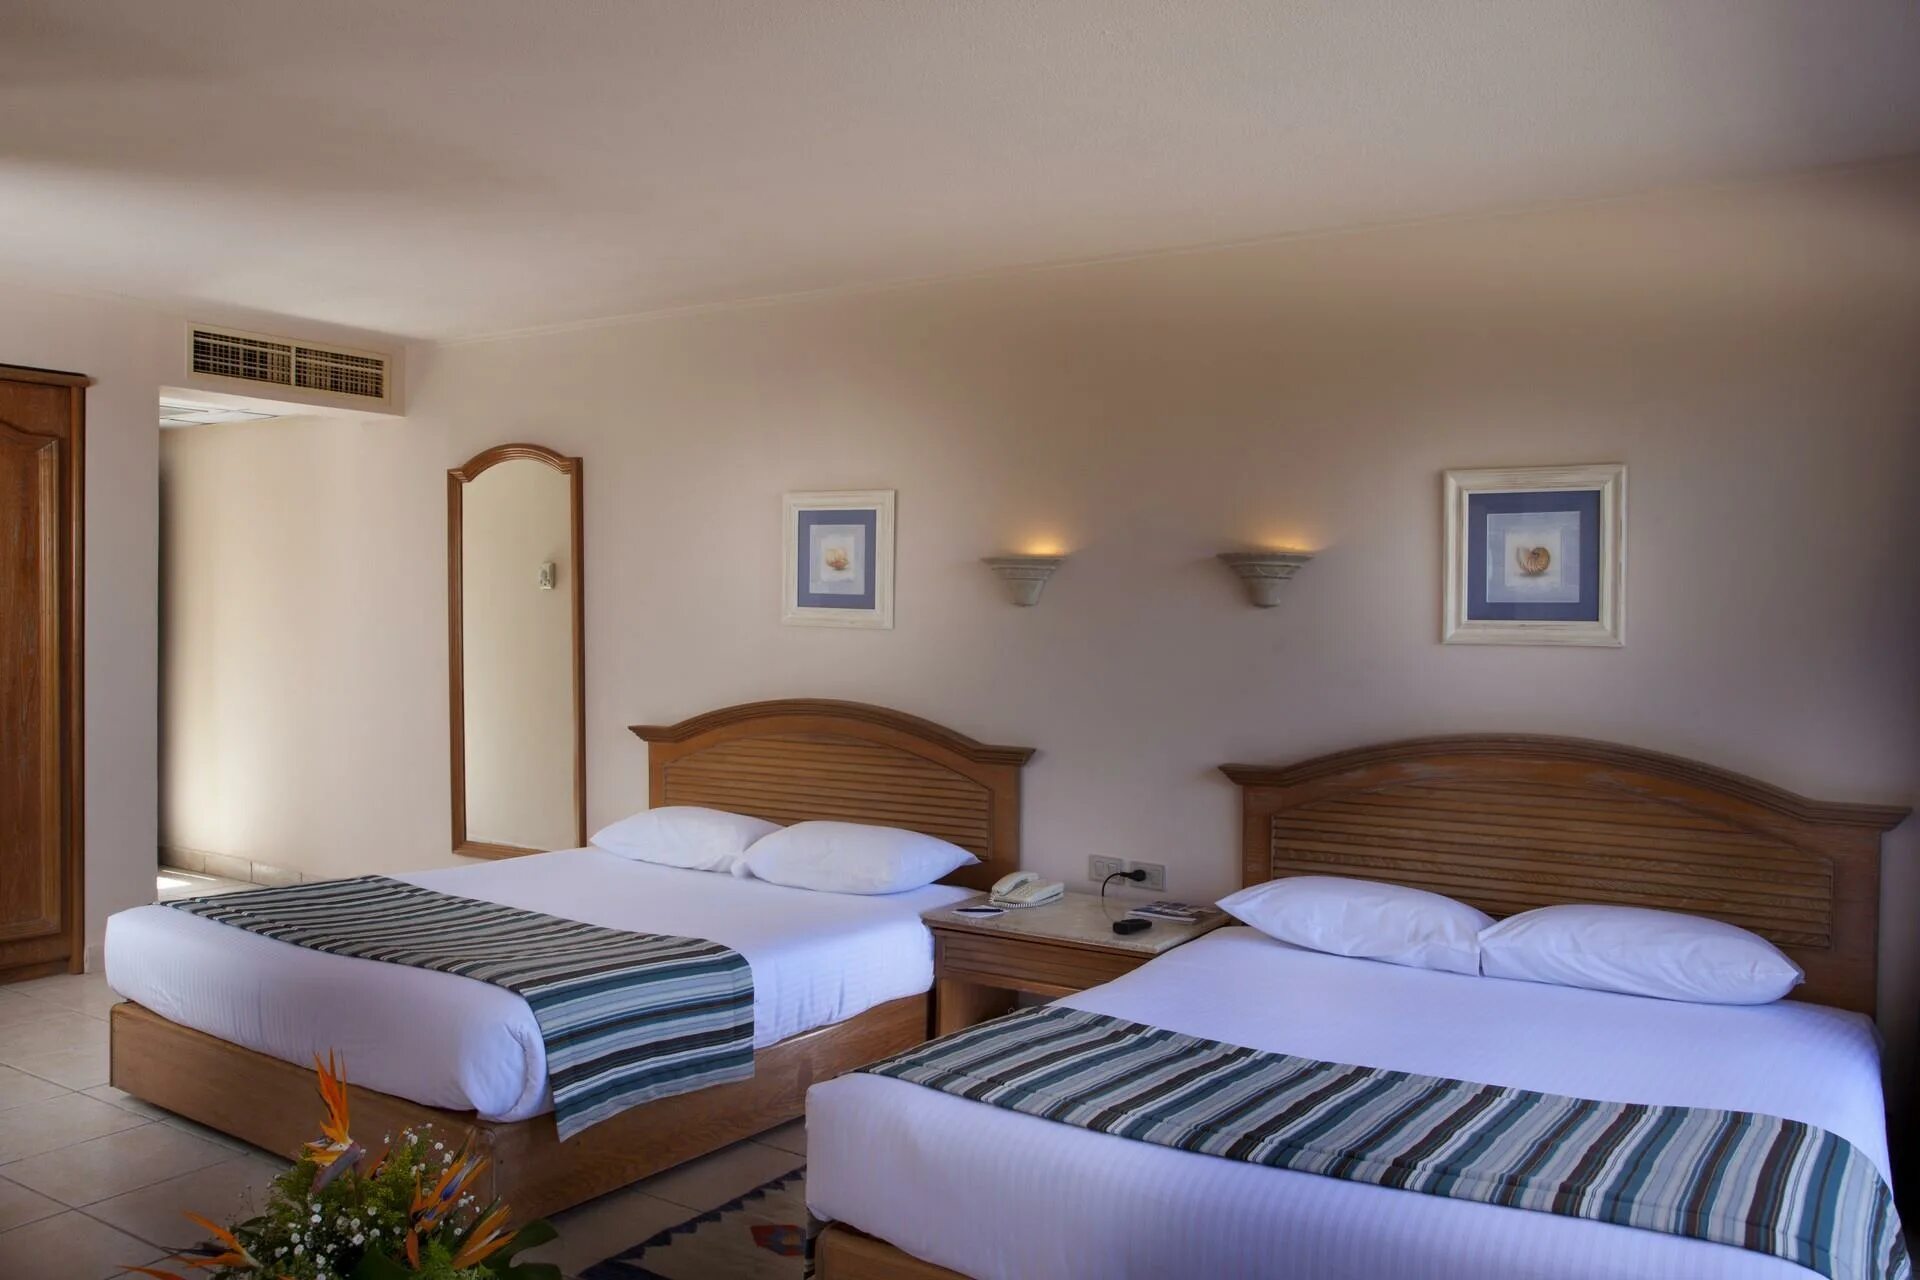 Hurghada hotel coral. Отель Coral Beach Hotel Hurghada. Корал Бич Хургада. Coral Beach Hotel Hurghada 4. Египет Хургада отель Корал Бич Резорт 4 звезды.